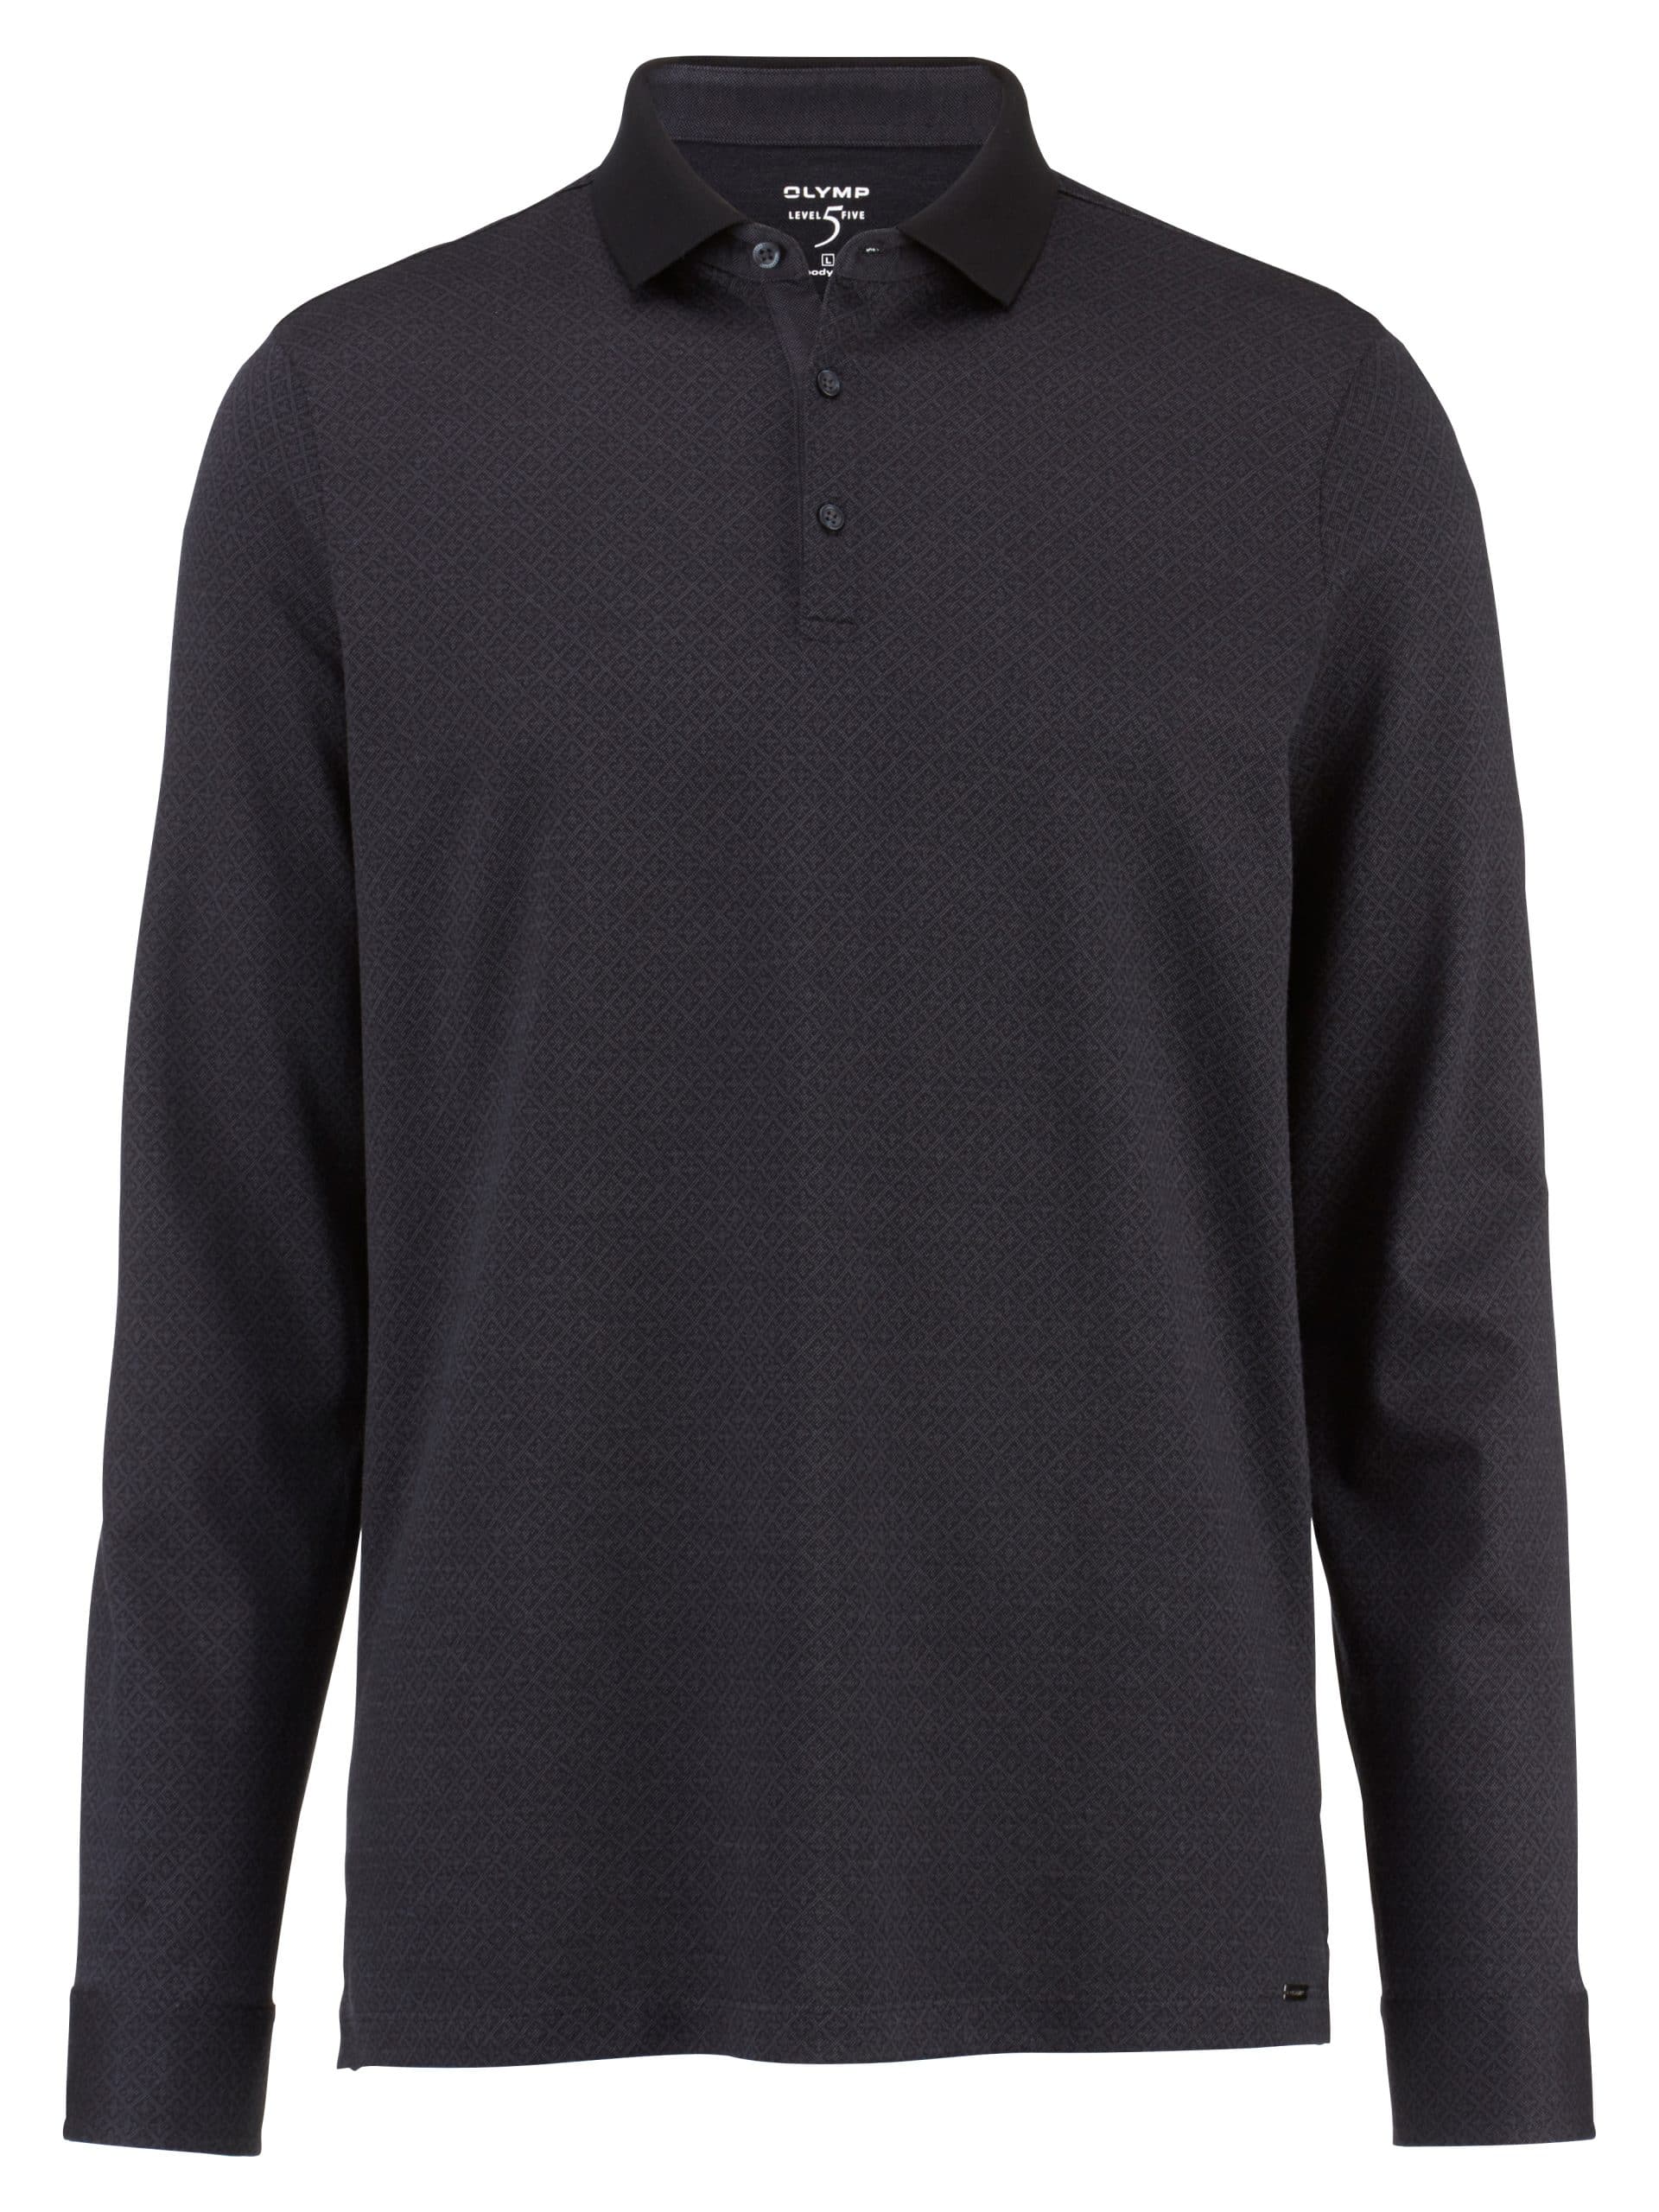 Olymp – Long Sleeve Cotton Polo – Black pattern - Eurostyle